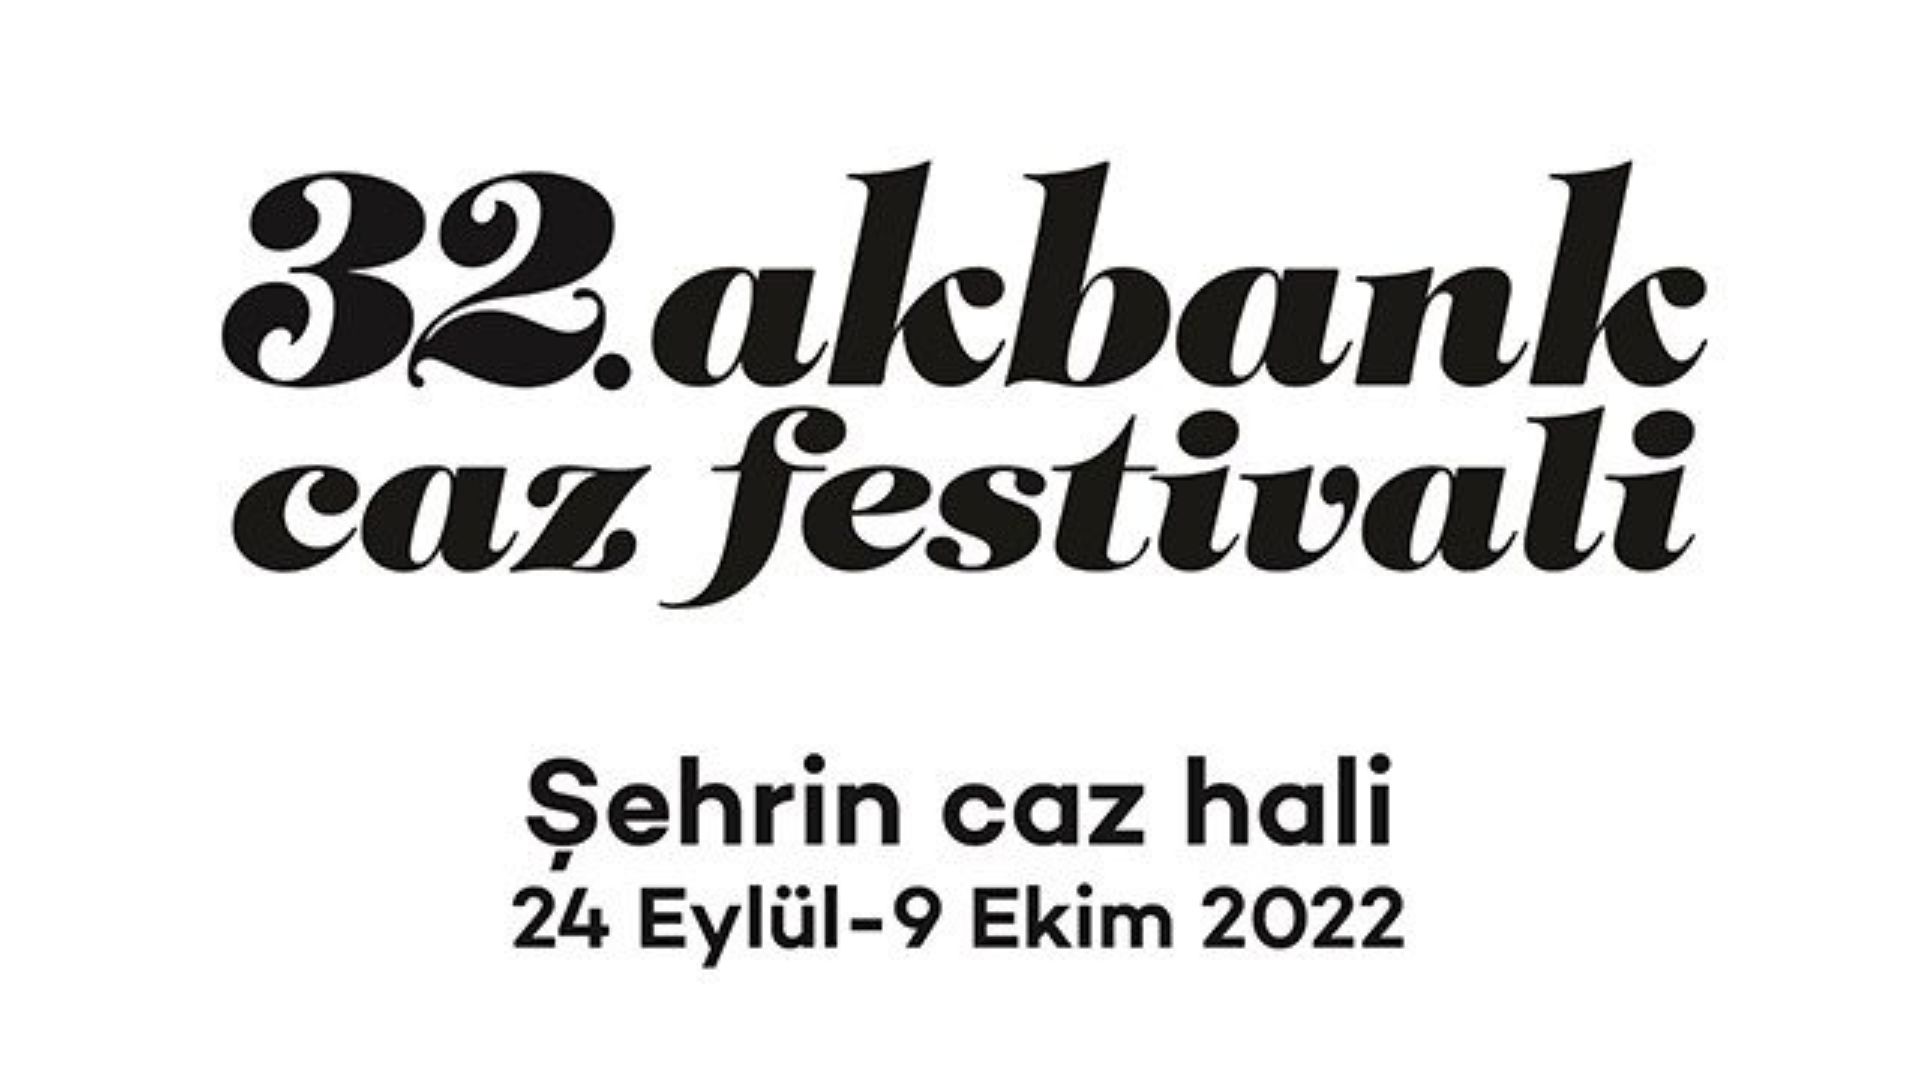 32. Akbank Caz Festivali 2022 festival